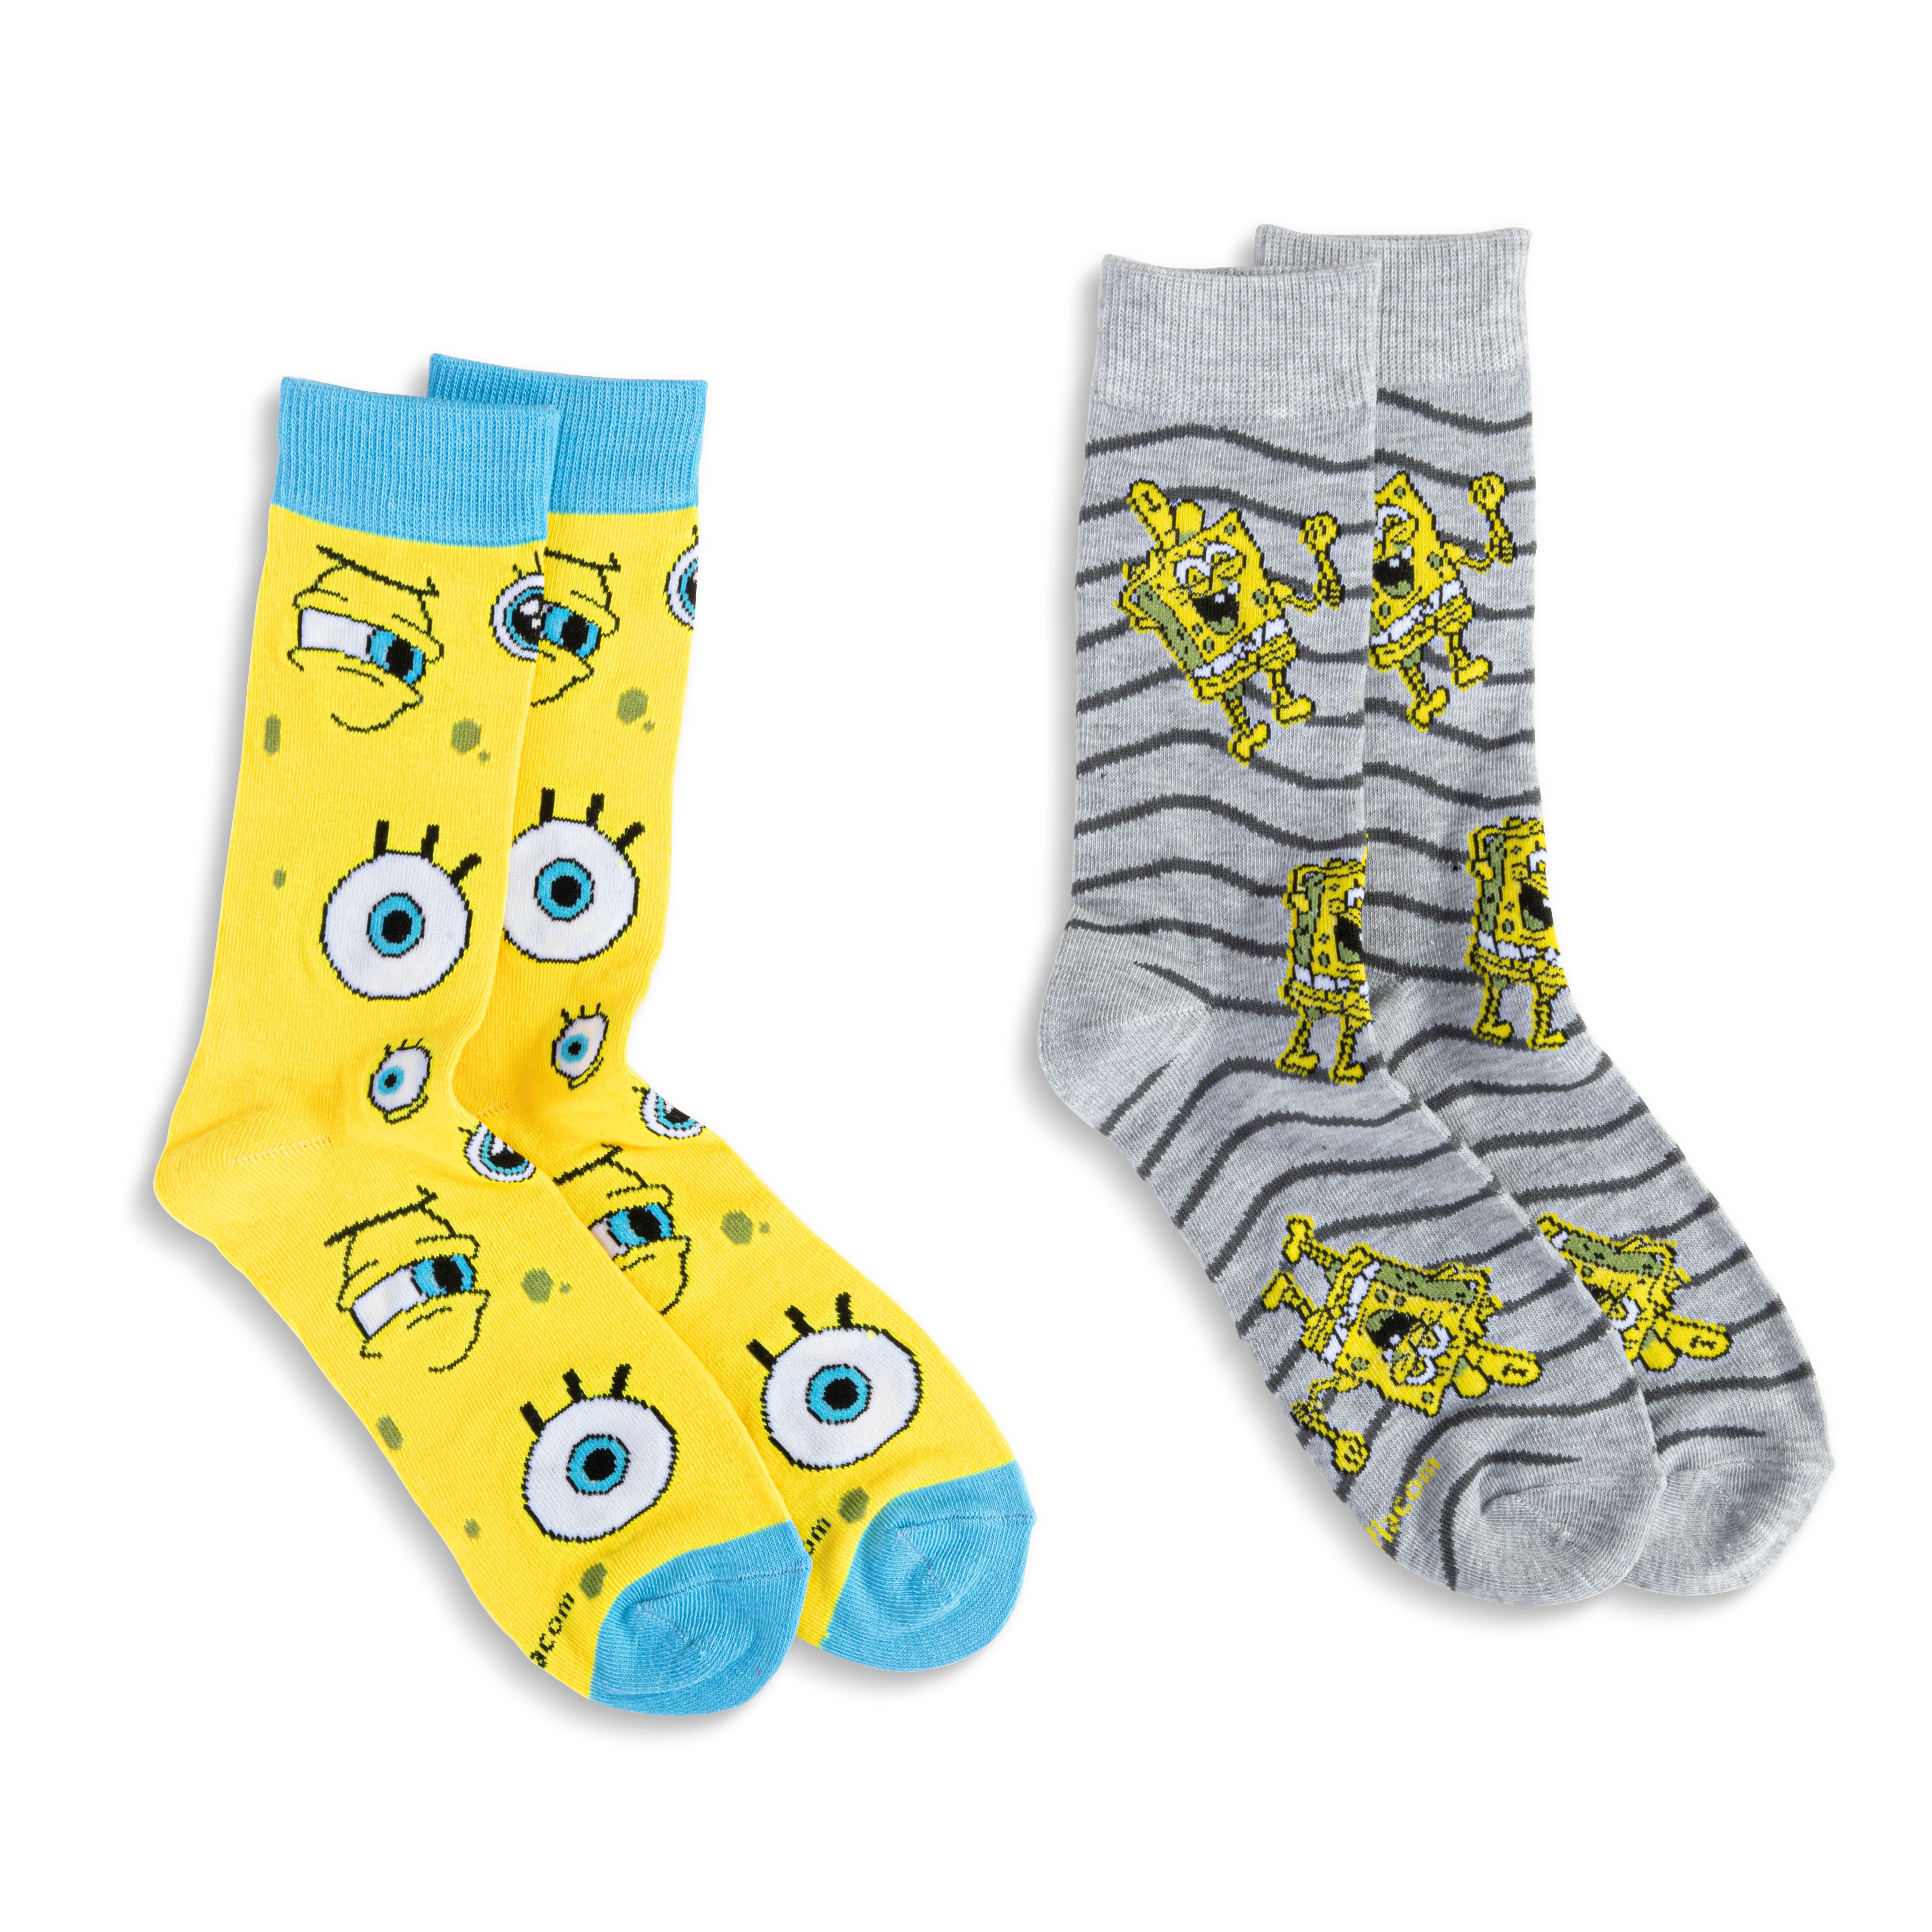 Licensed Socks Spongebob - Dollars and Sense